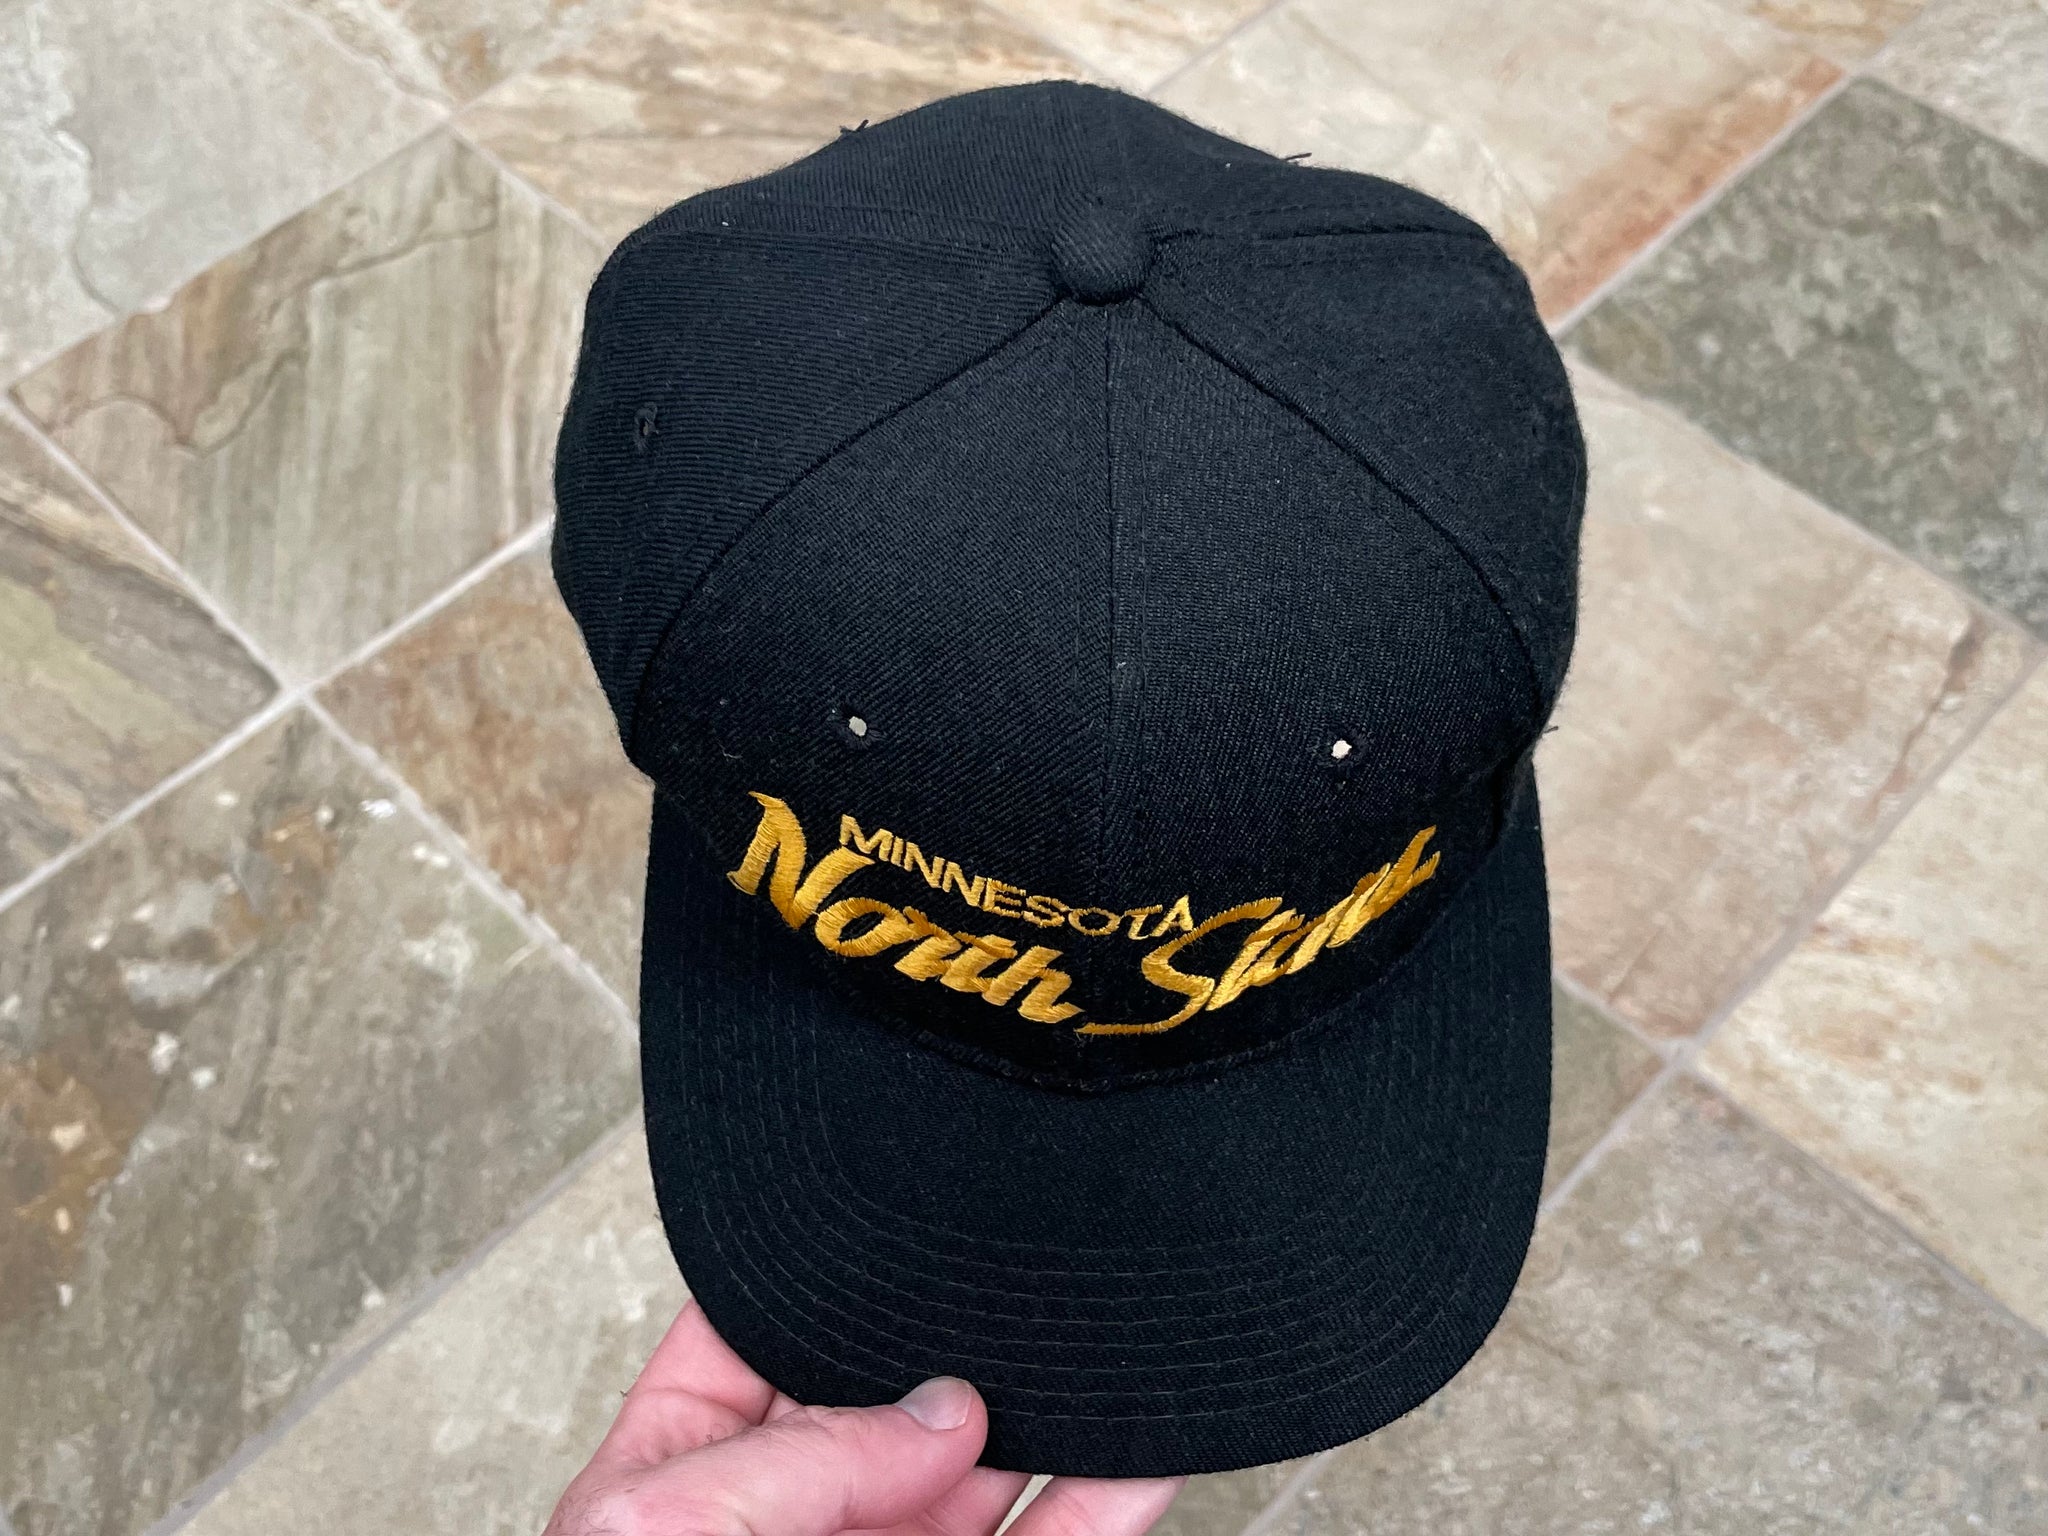 Mitchell & Ness Black/Gold Boston Bruins Vintage Script Snapback Hat